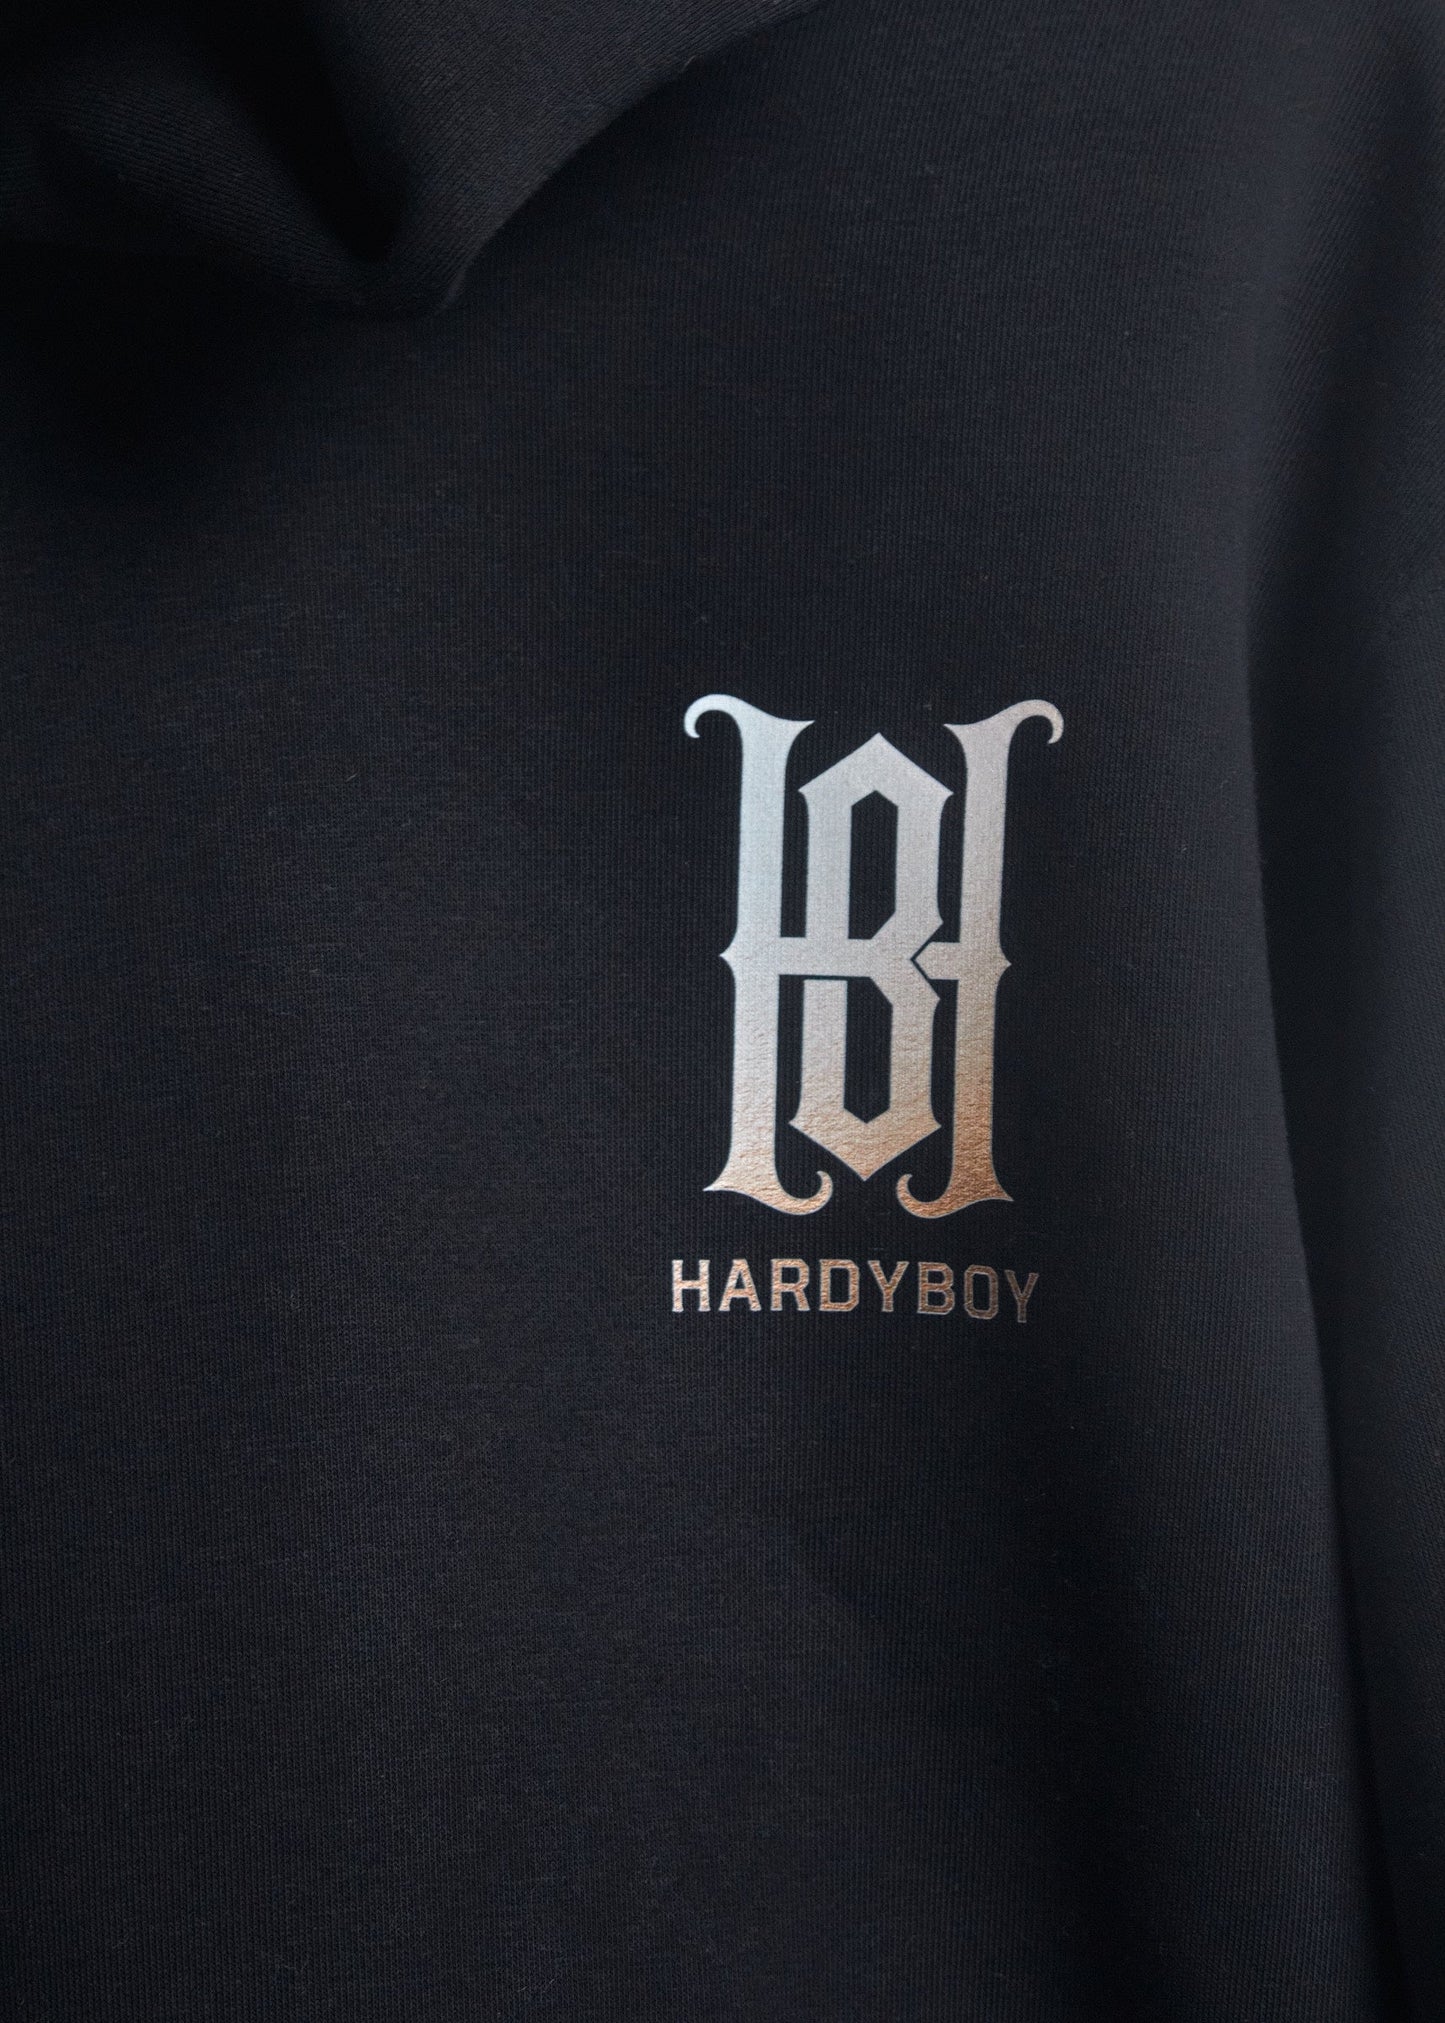 Black hoodie with Hardyboy monologo on left chest